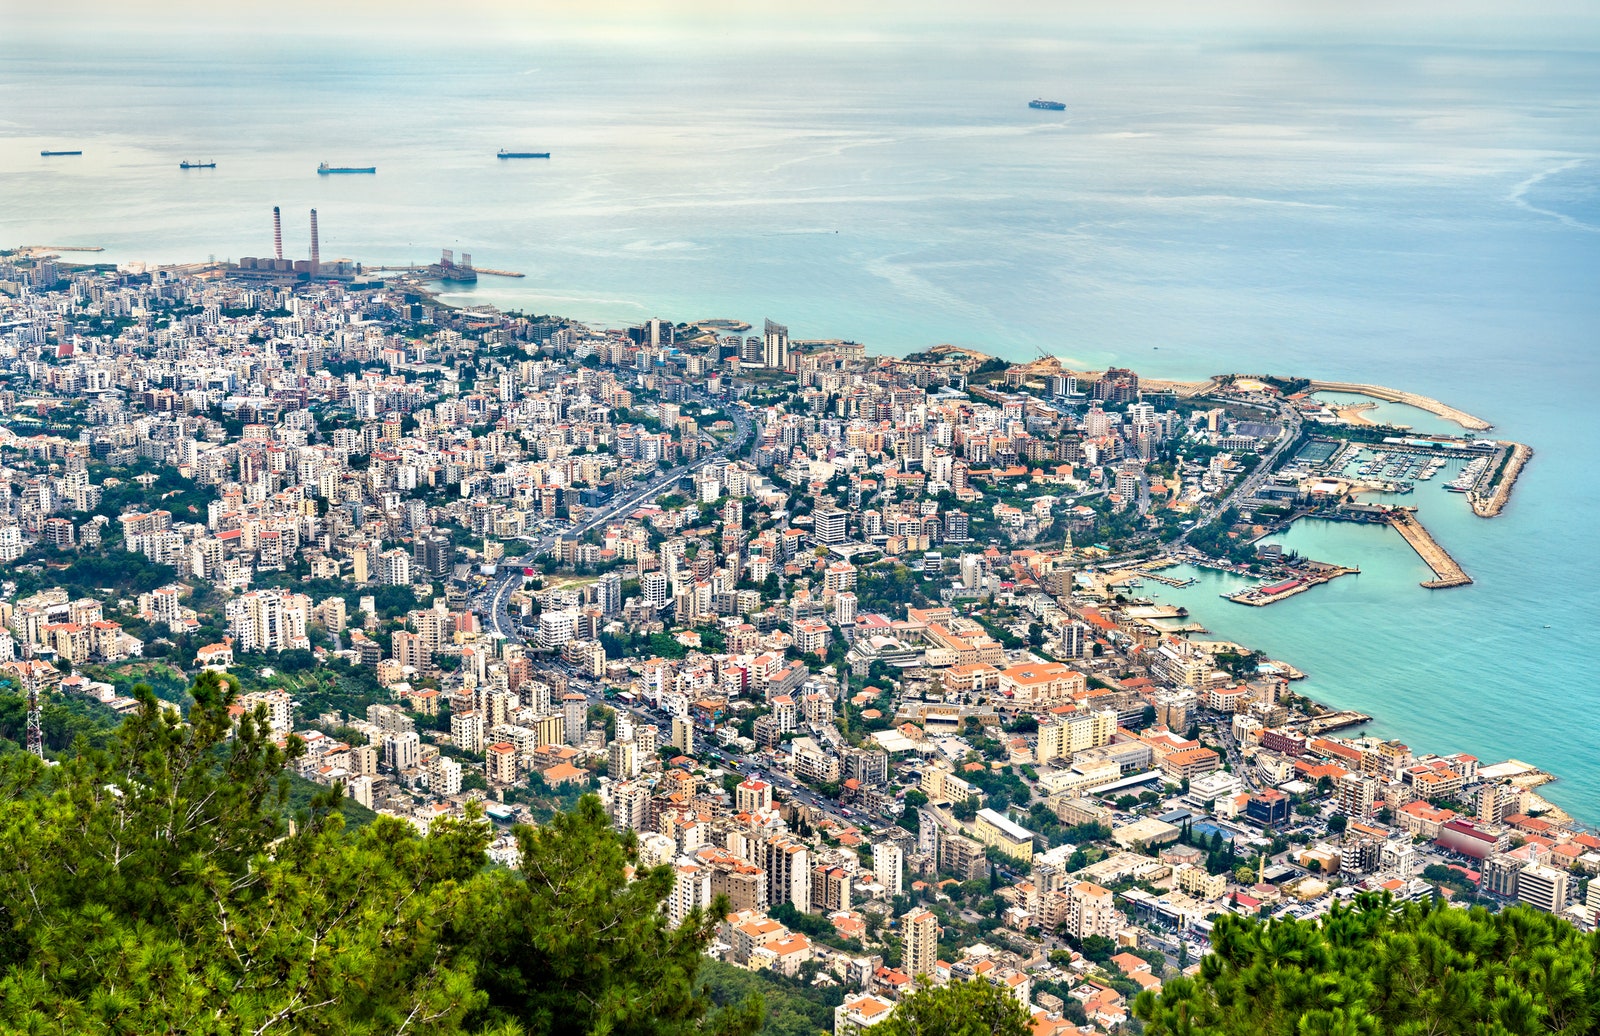 Lebanon's Mediterranean coastline